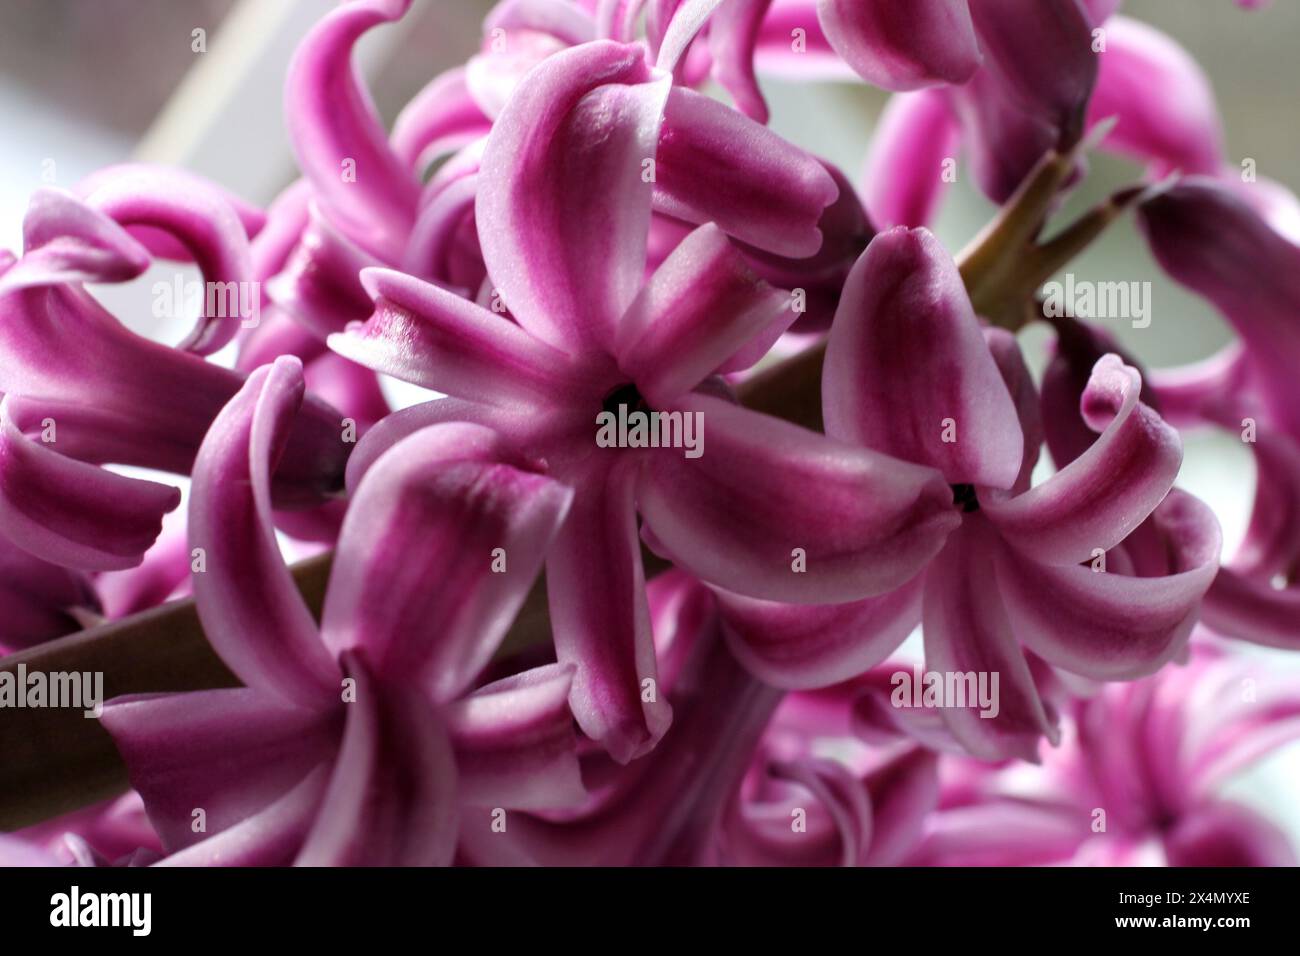 Rosa fiori di giacinto closeup Foto Stock